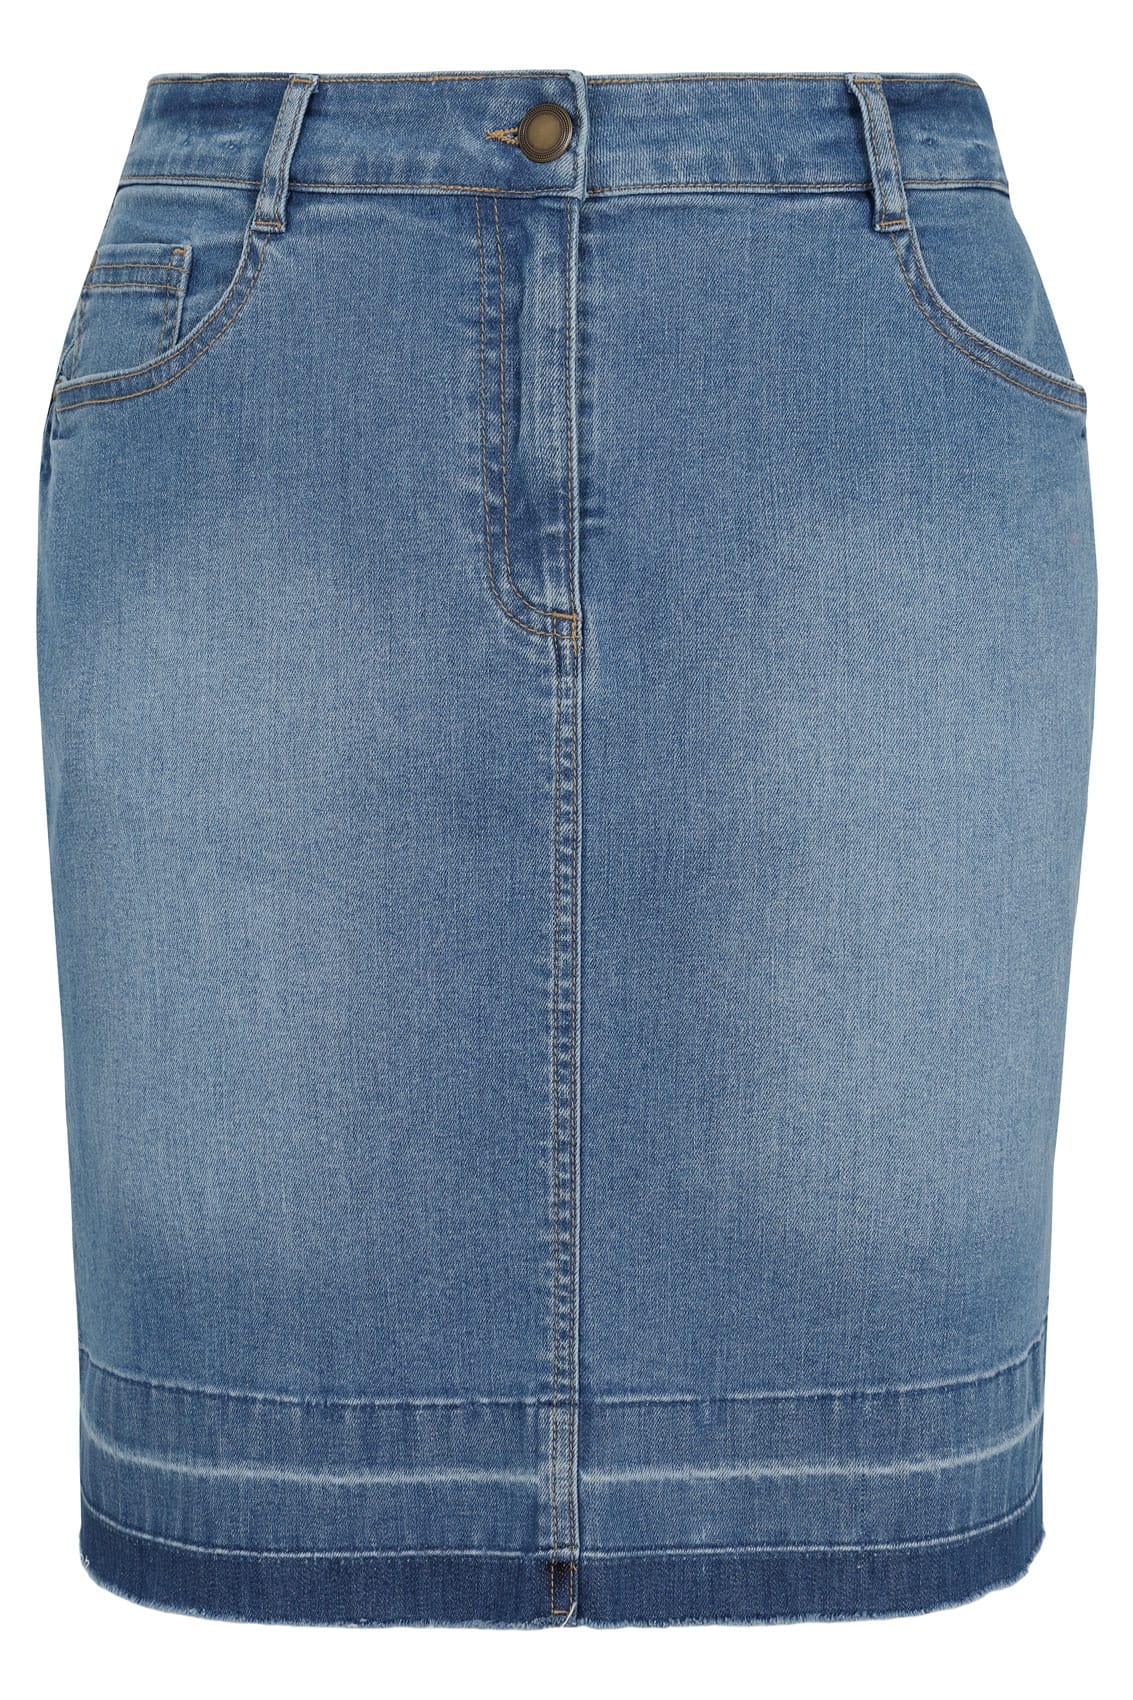 Mid Blue Faded 5 Pocket Denim Skirt With Raw Hem plus size 16 to 30